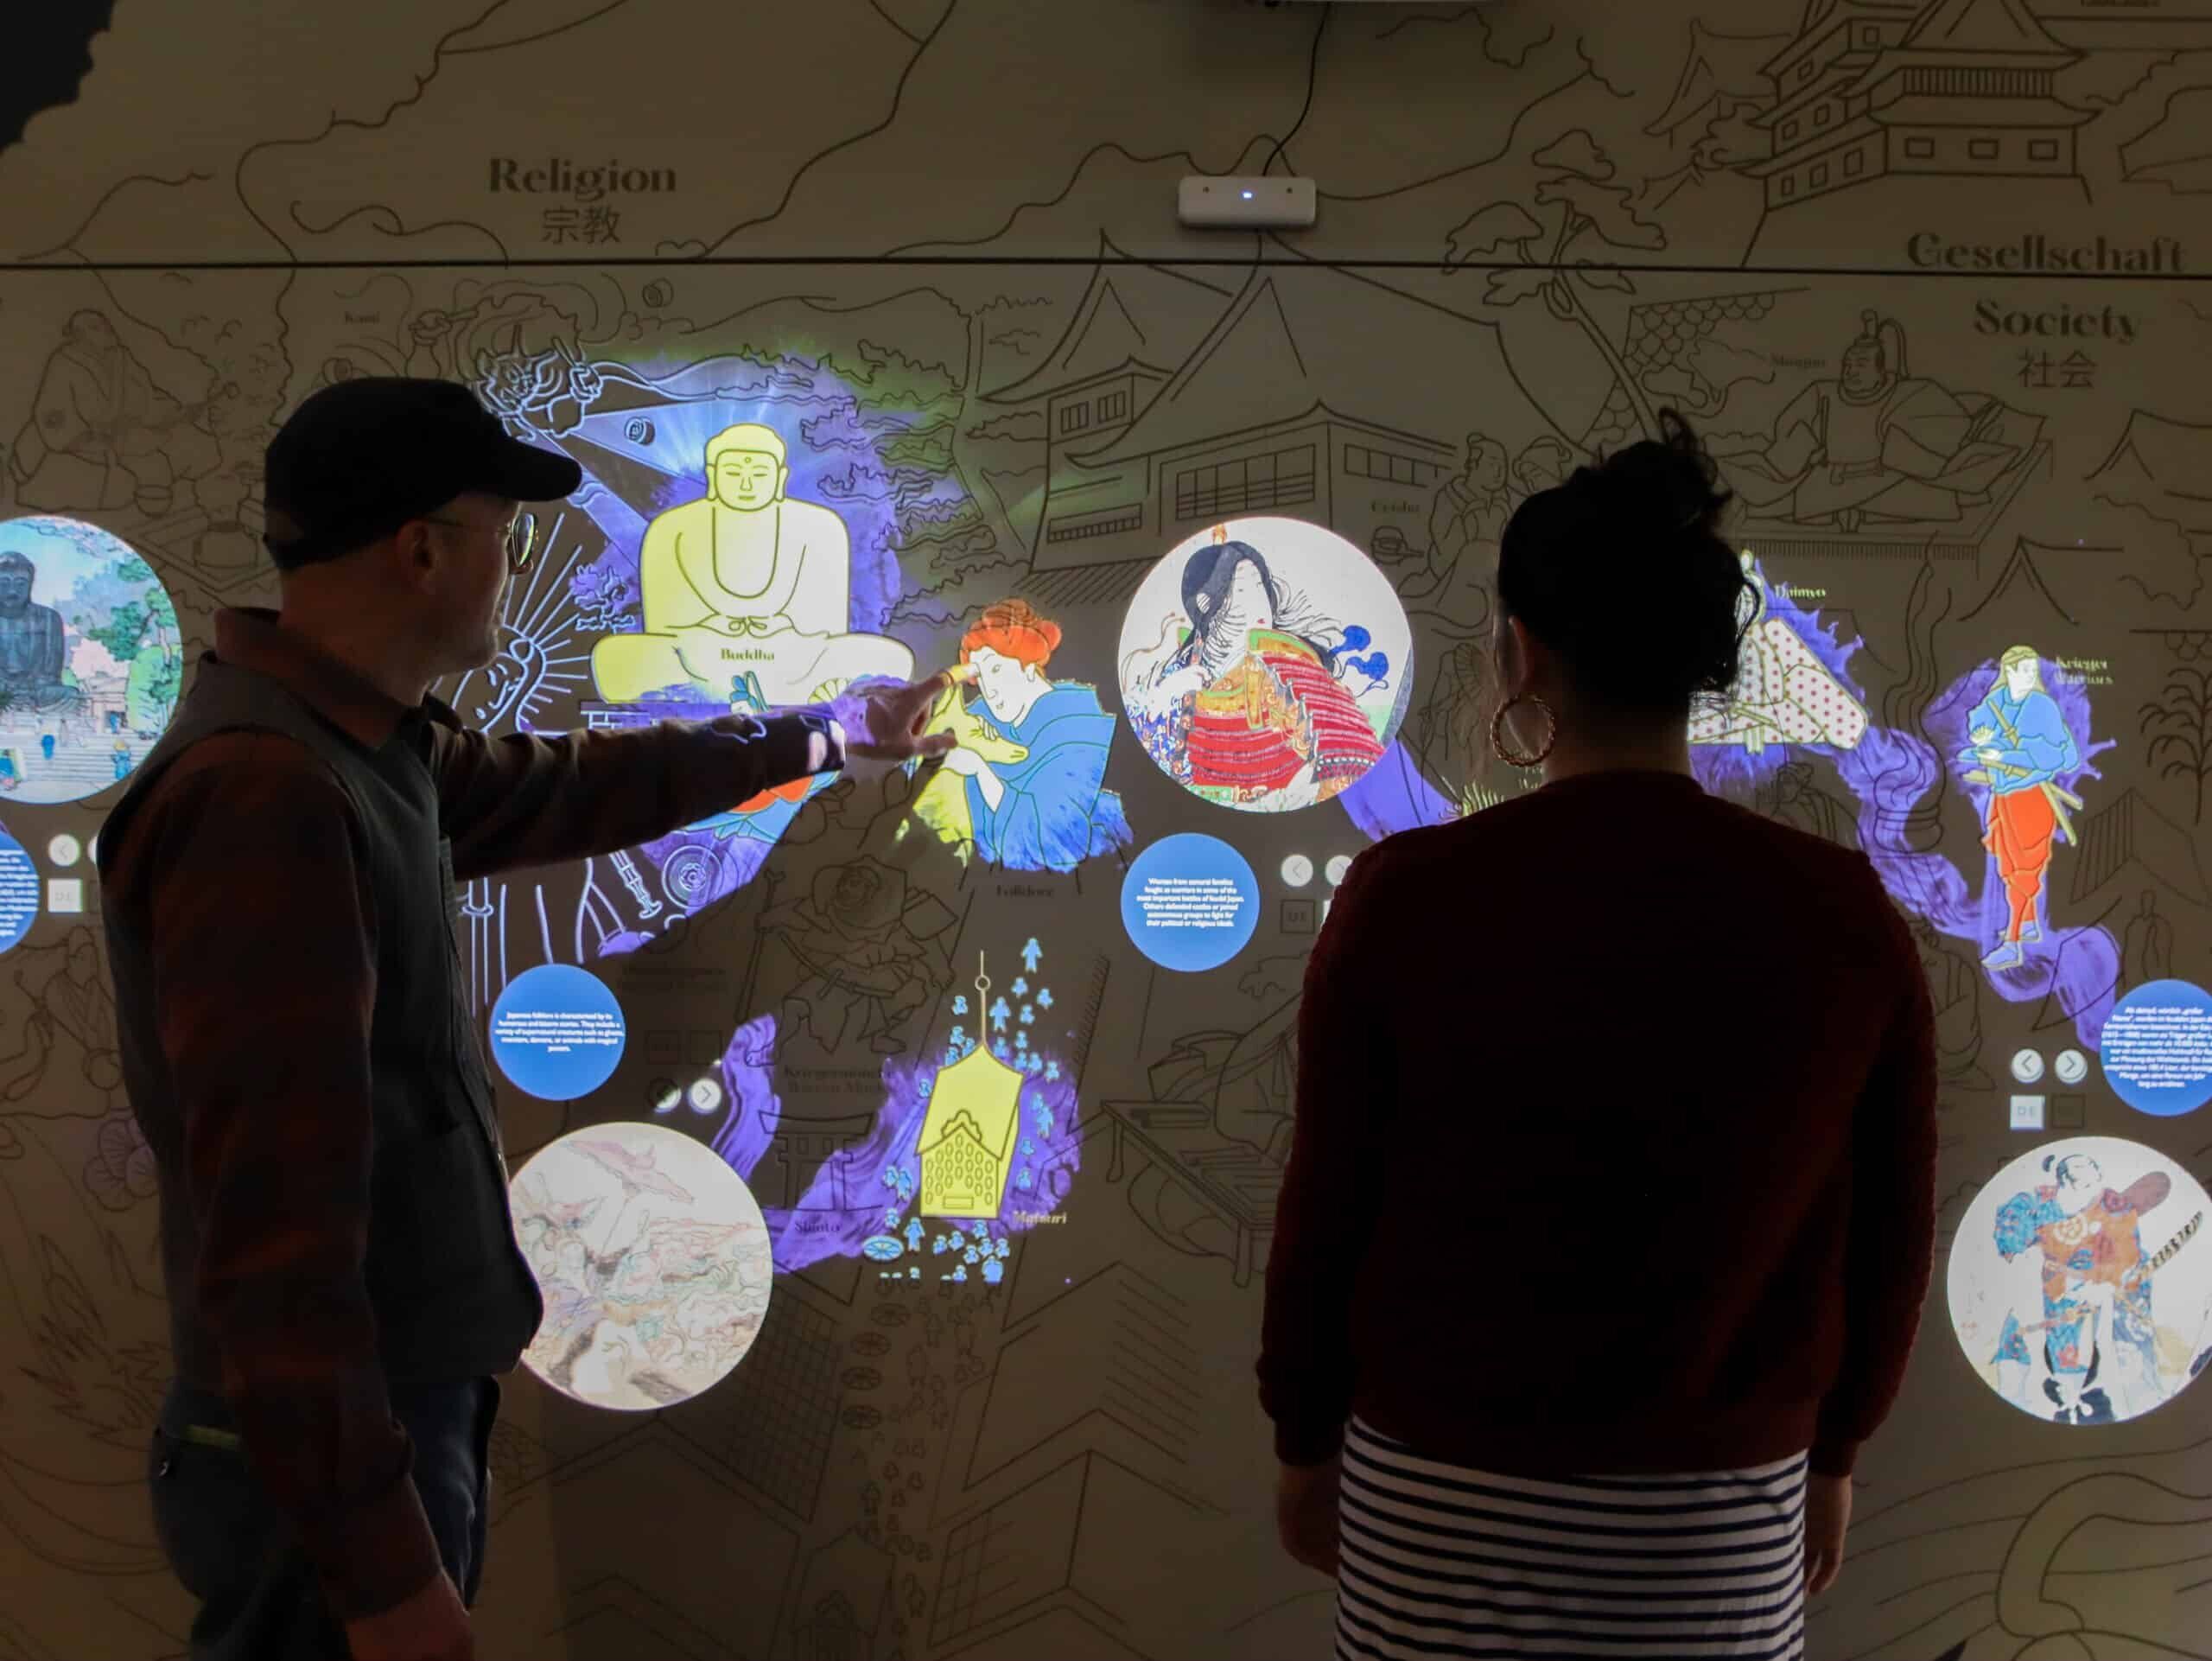 Interaktive Wand mit Projection Mapping und Touchscreens